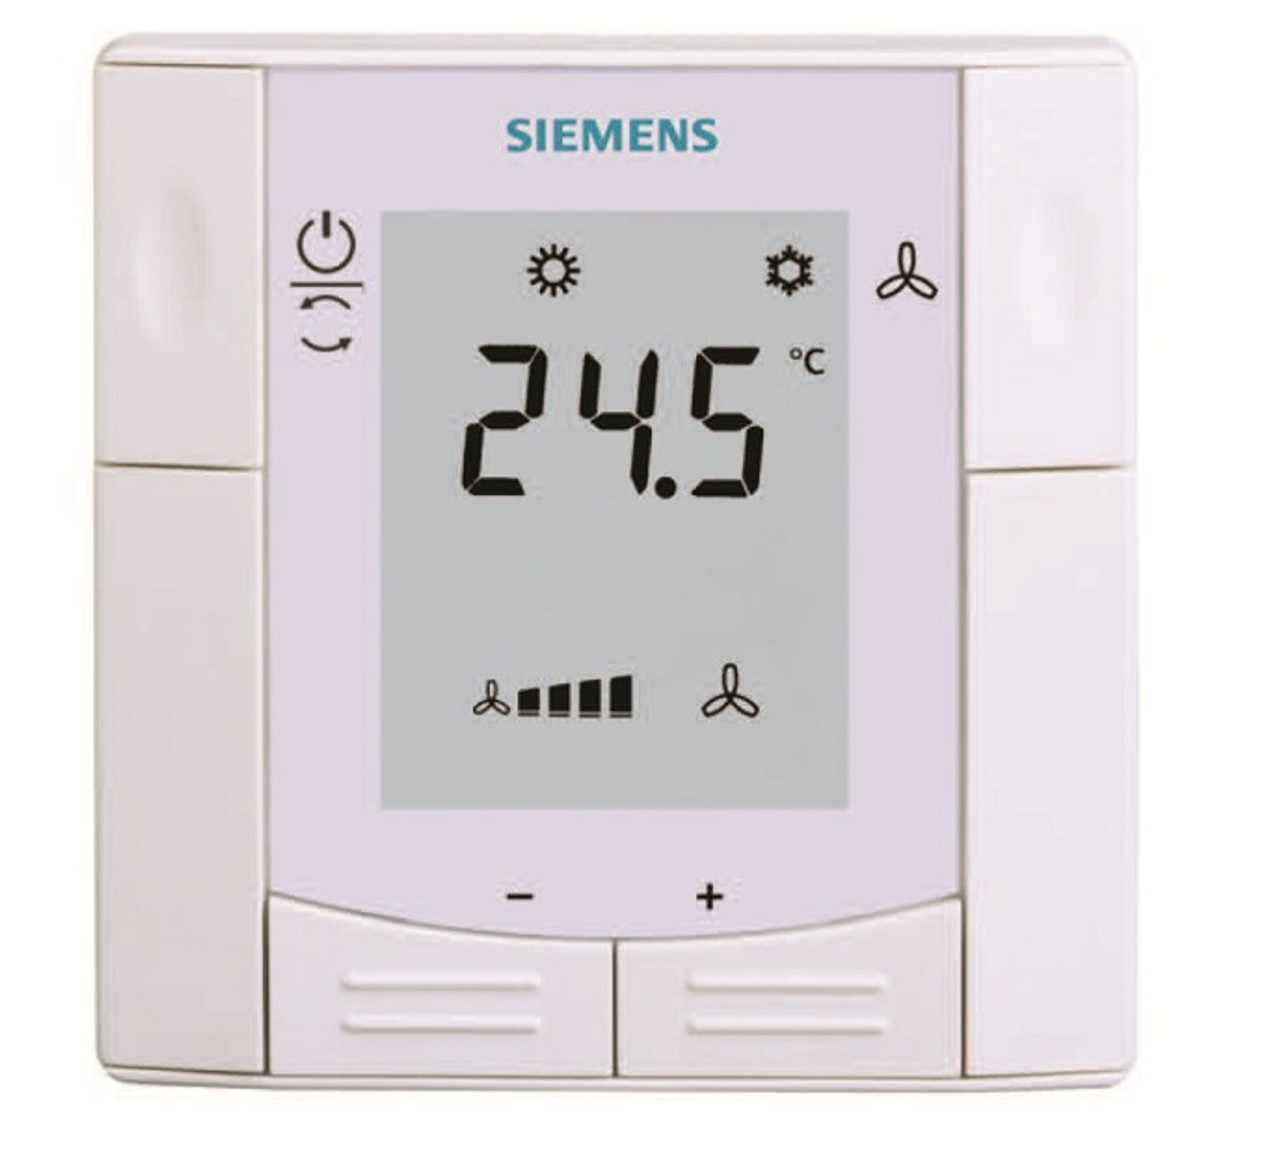 Termostato Siemens RAB 21